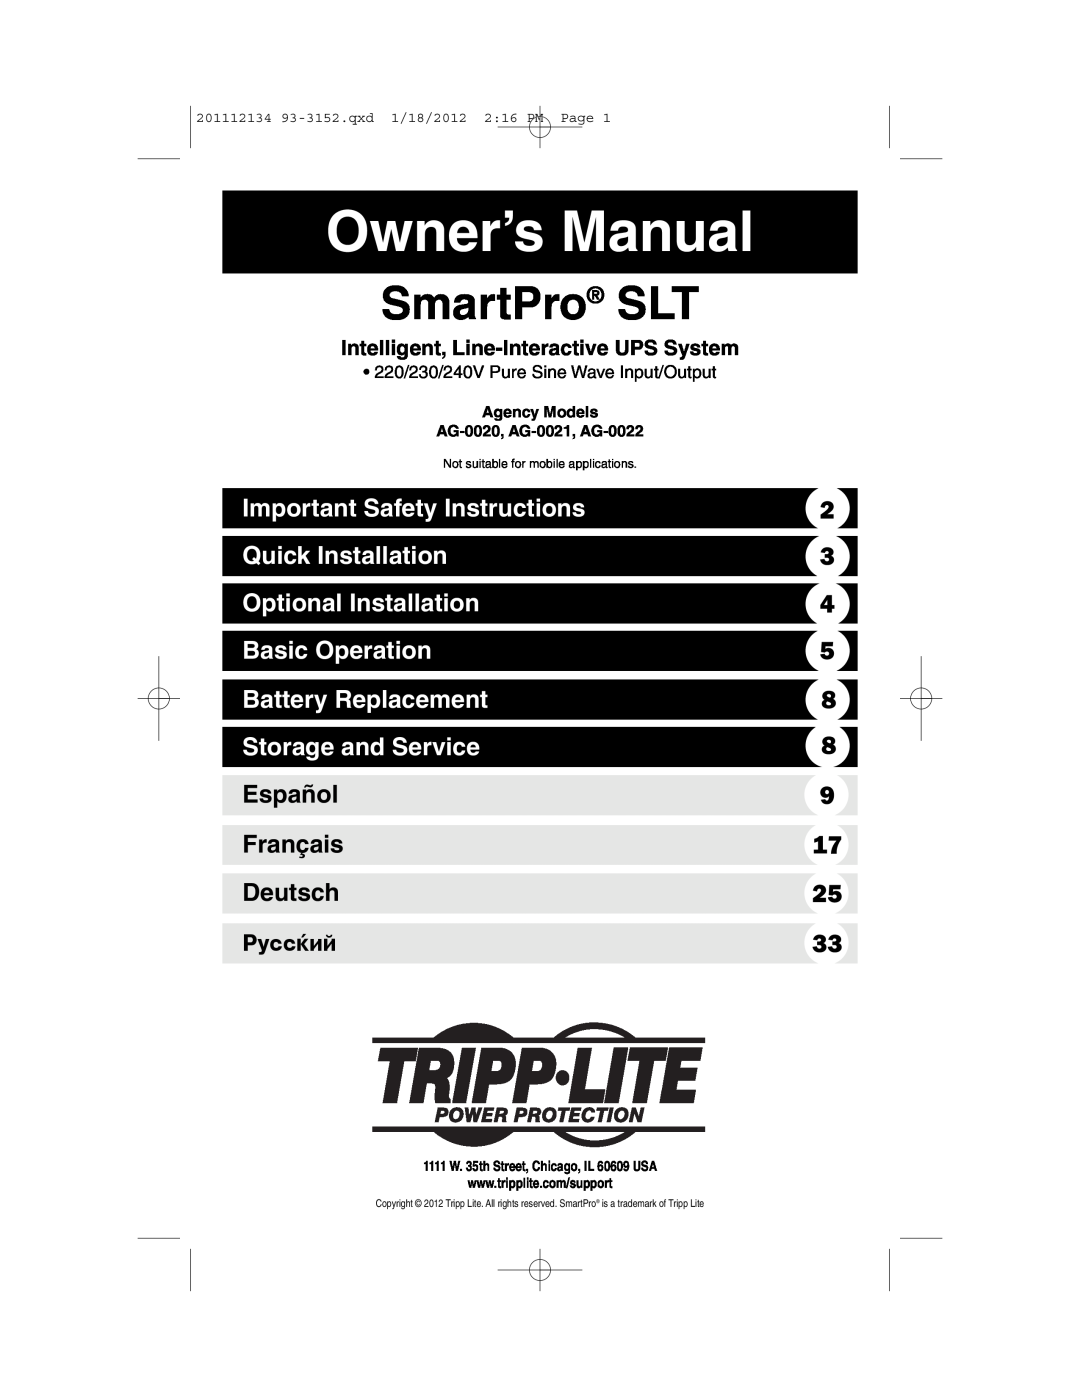 Tripp Lite AG-0021 owner manual Owner’s Manual, SmartPro SLT, Important Safety Instructions, Quick Installation, Español 